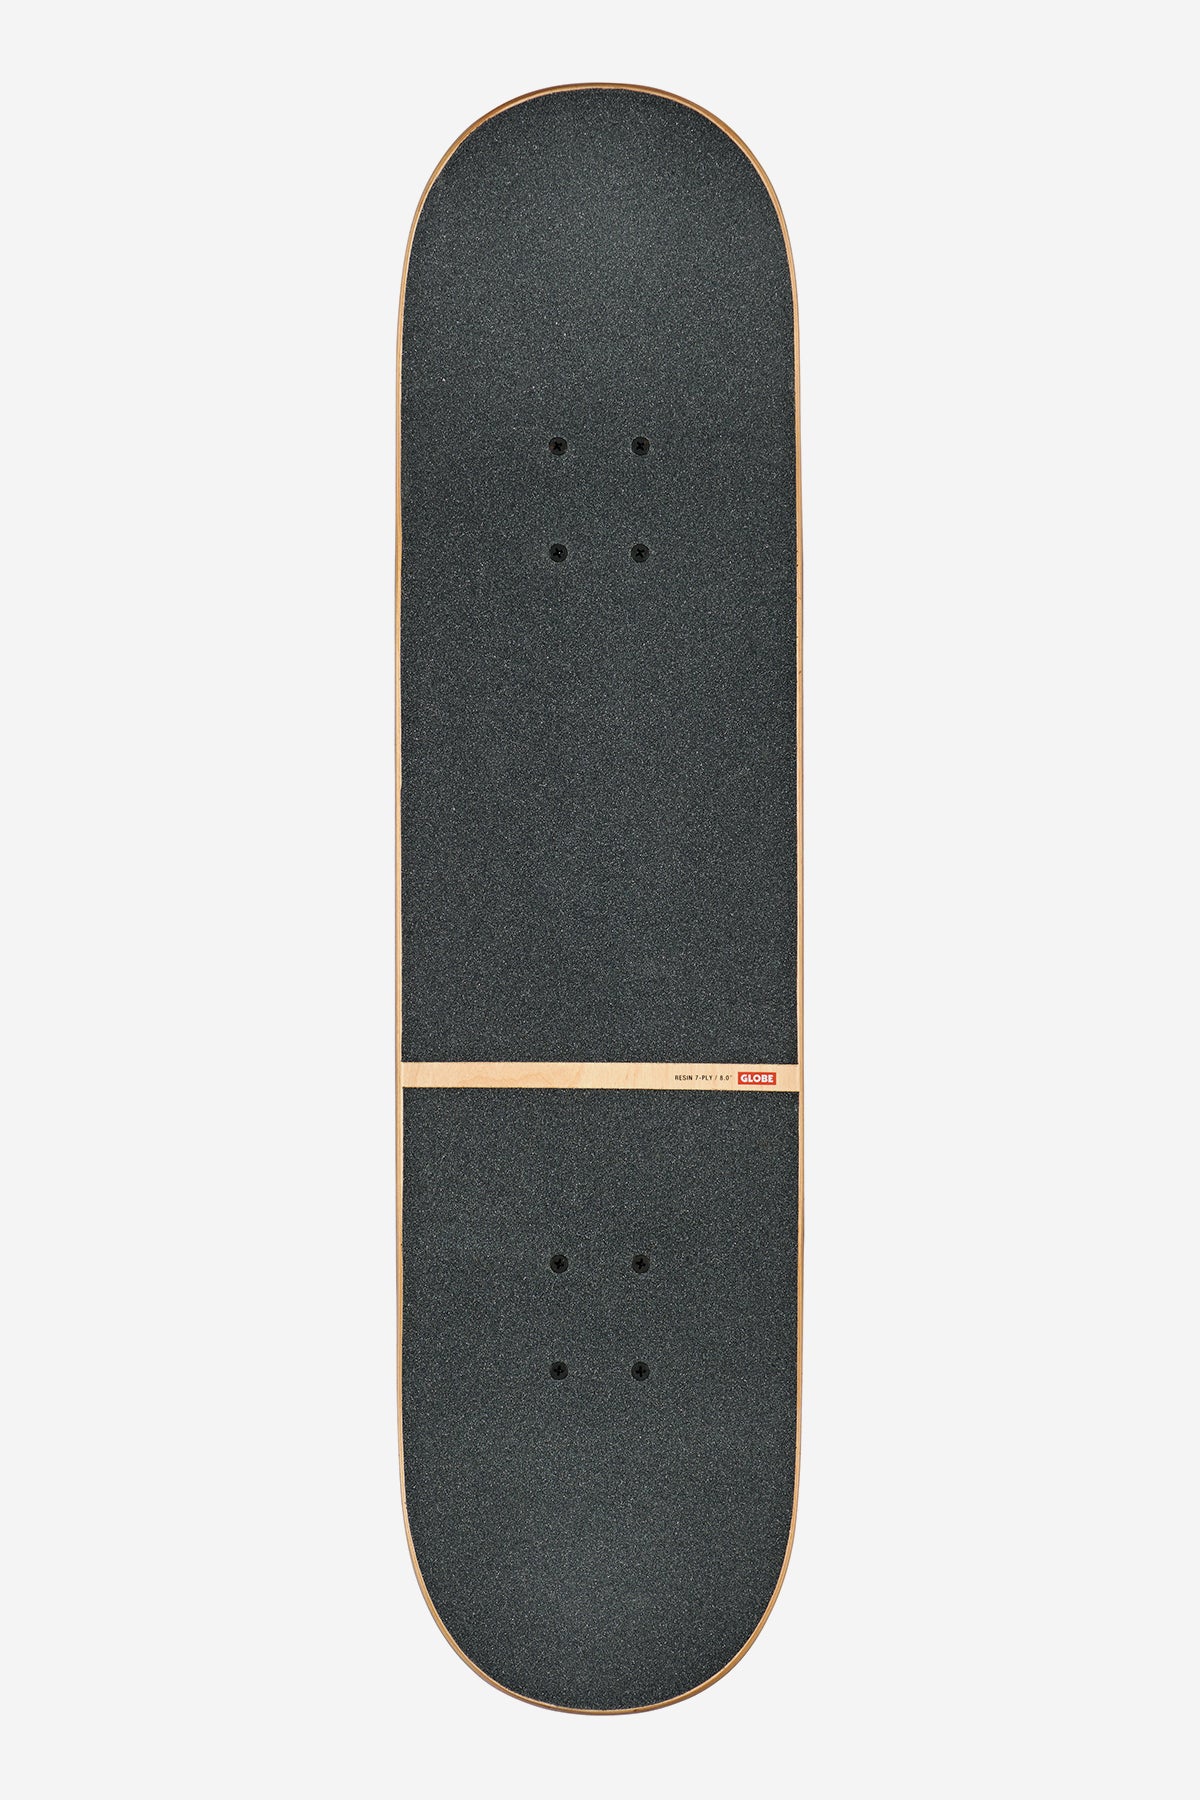 Globe - G1 Stack - Refracted - 8.0" Compleet Skateboard